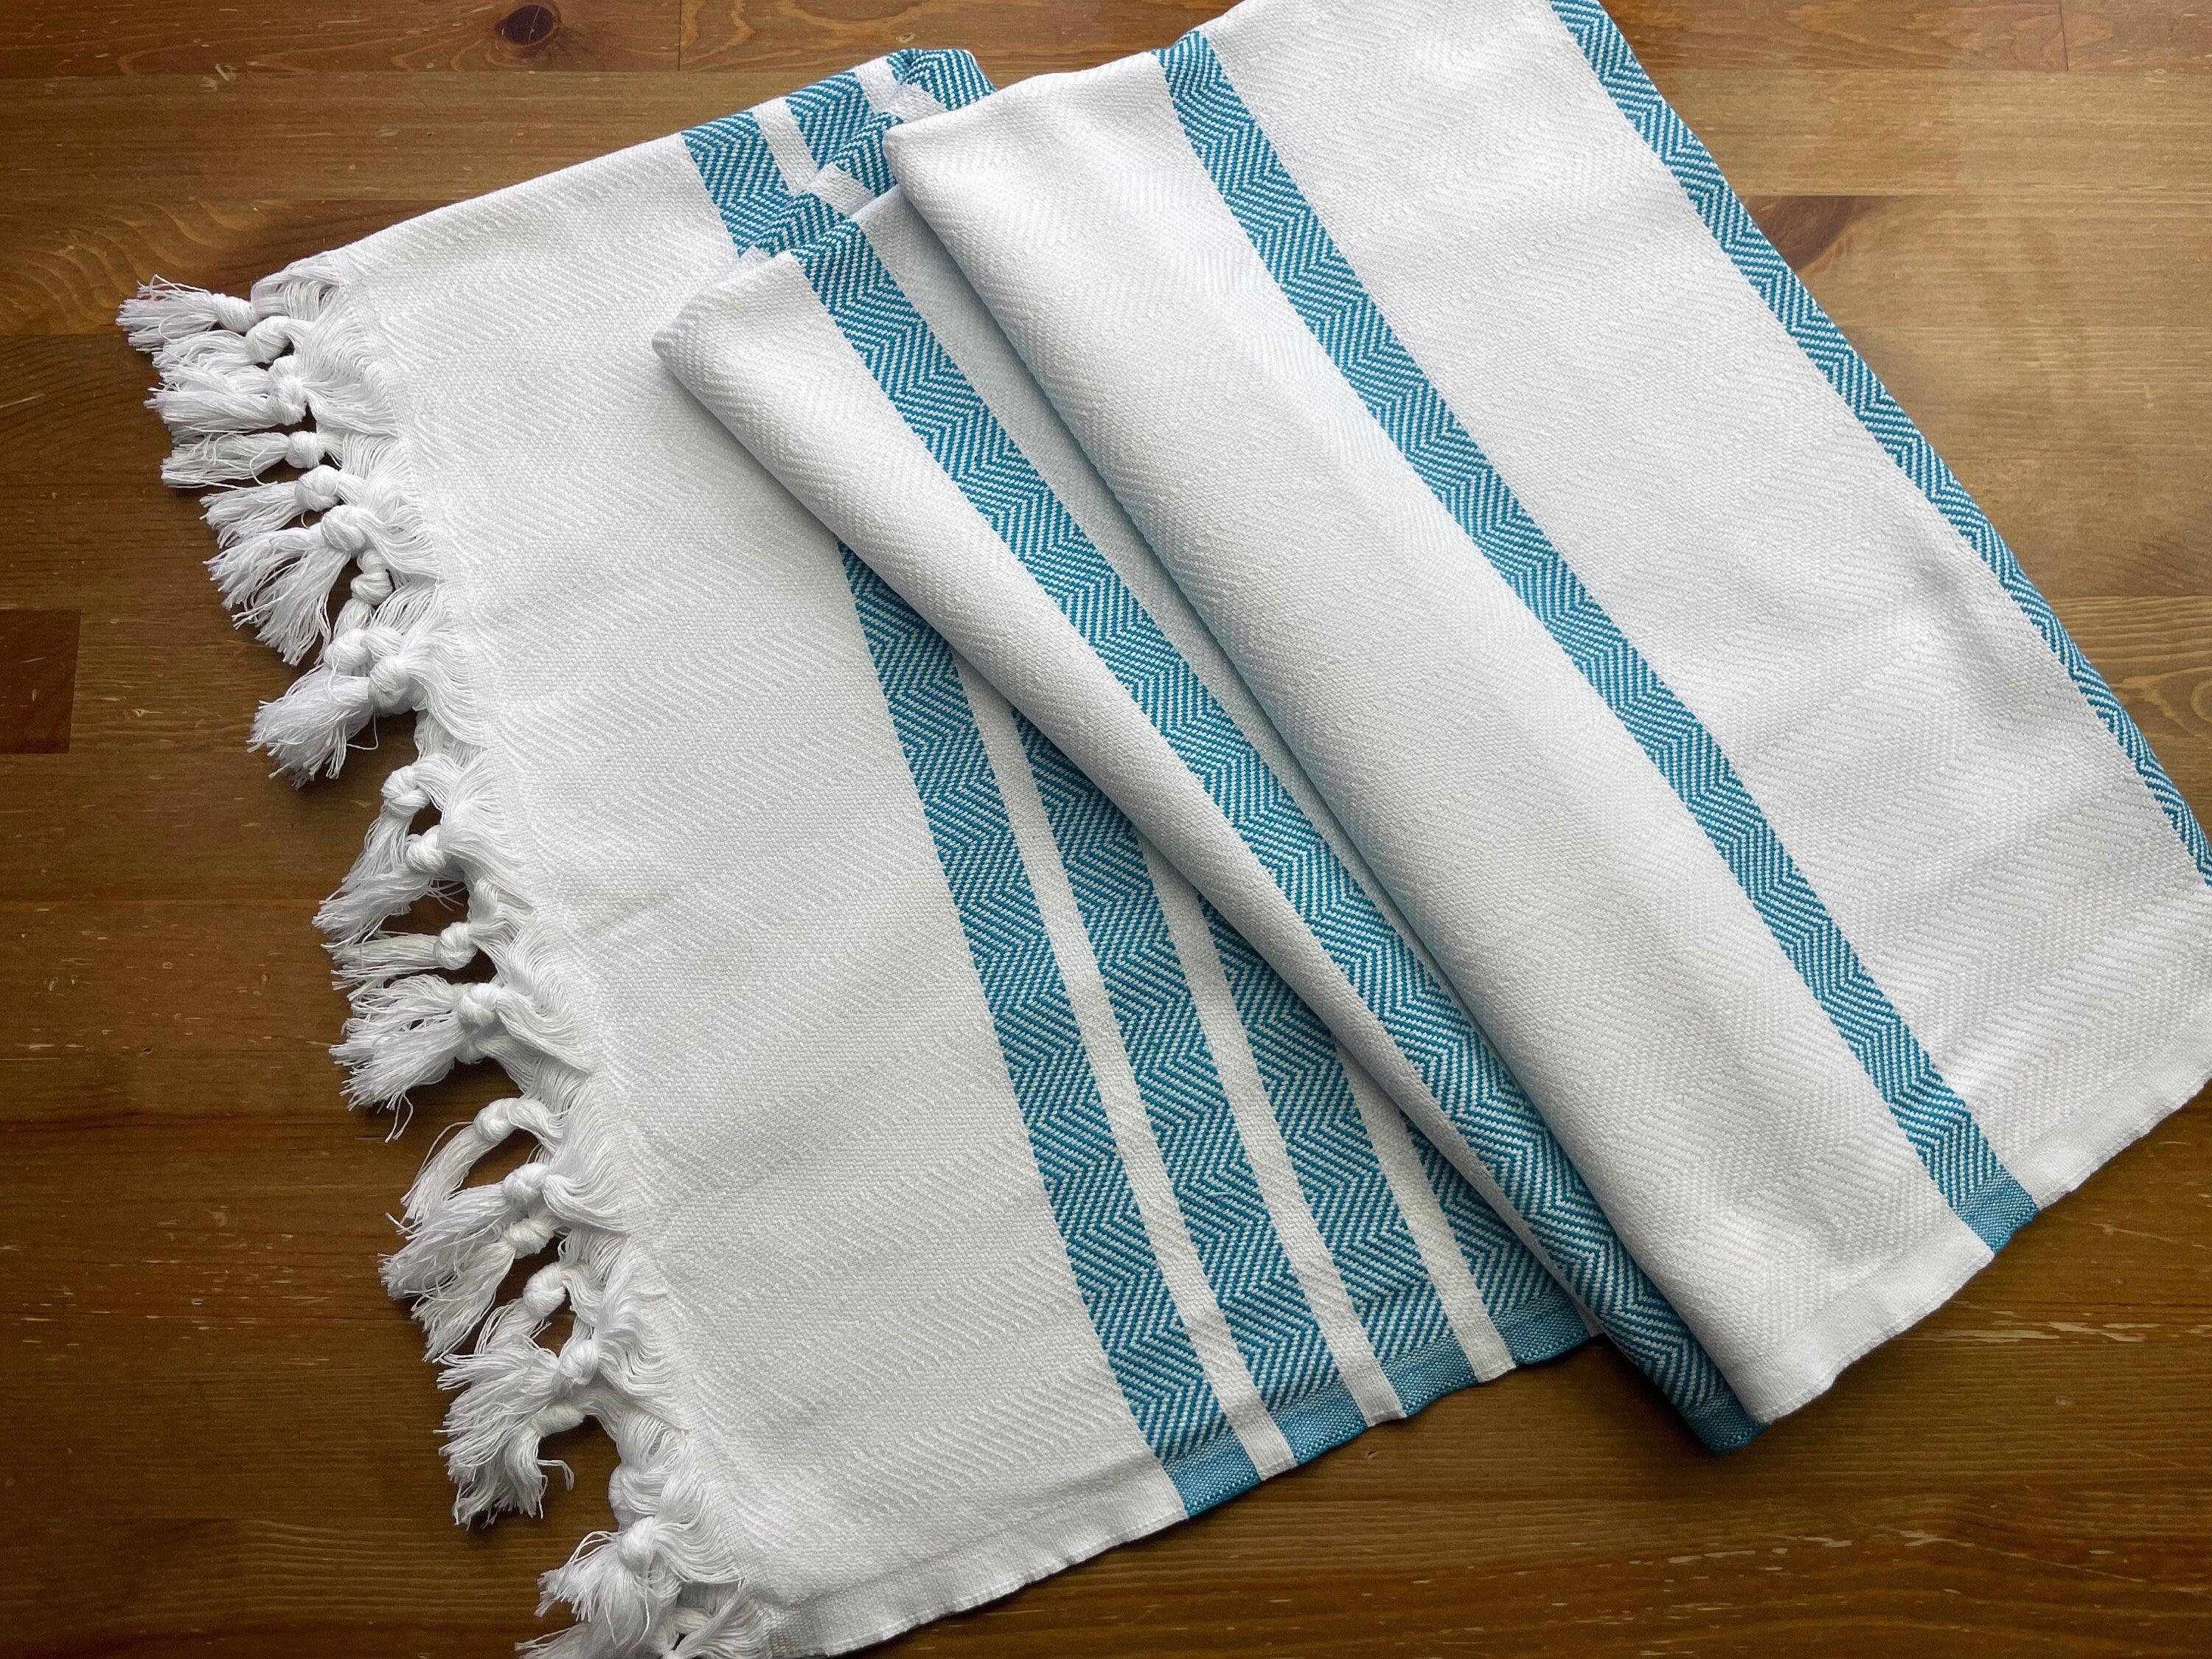 Charming Turkish Peshtemal Towel, Turkish Bath Towel, Cotton Bath Towel, 100% Cotton Towel, Turkish Towel Beach, Striped Peshtemal, Holiday Towels available at Moyoni Design